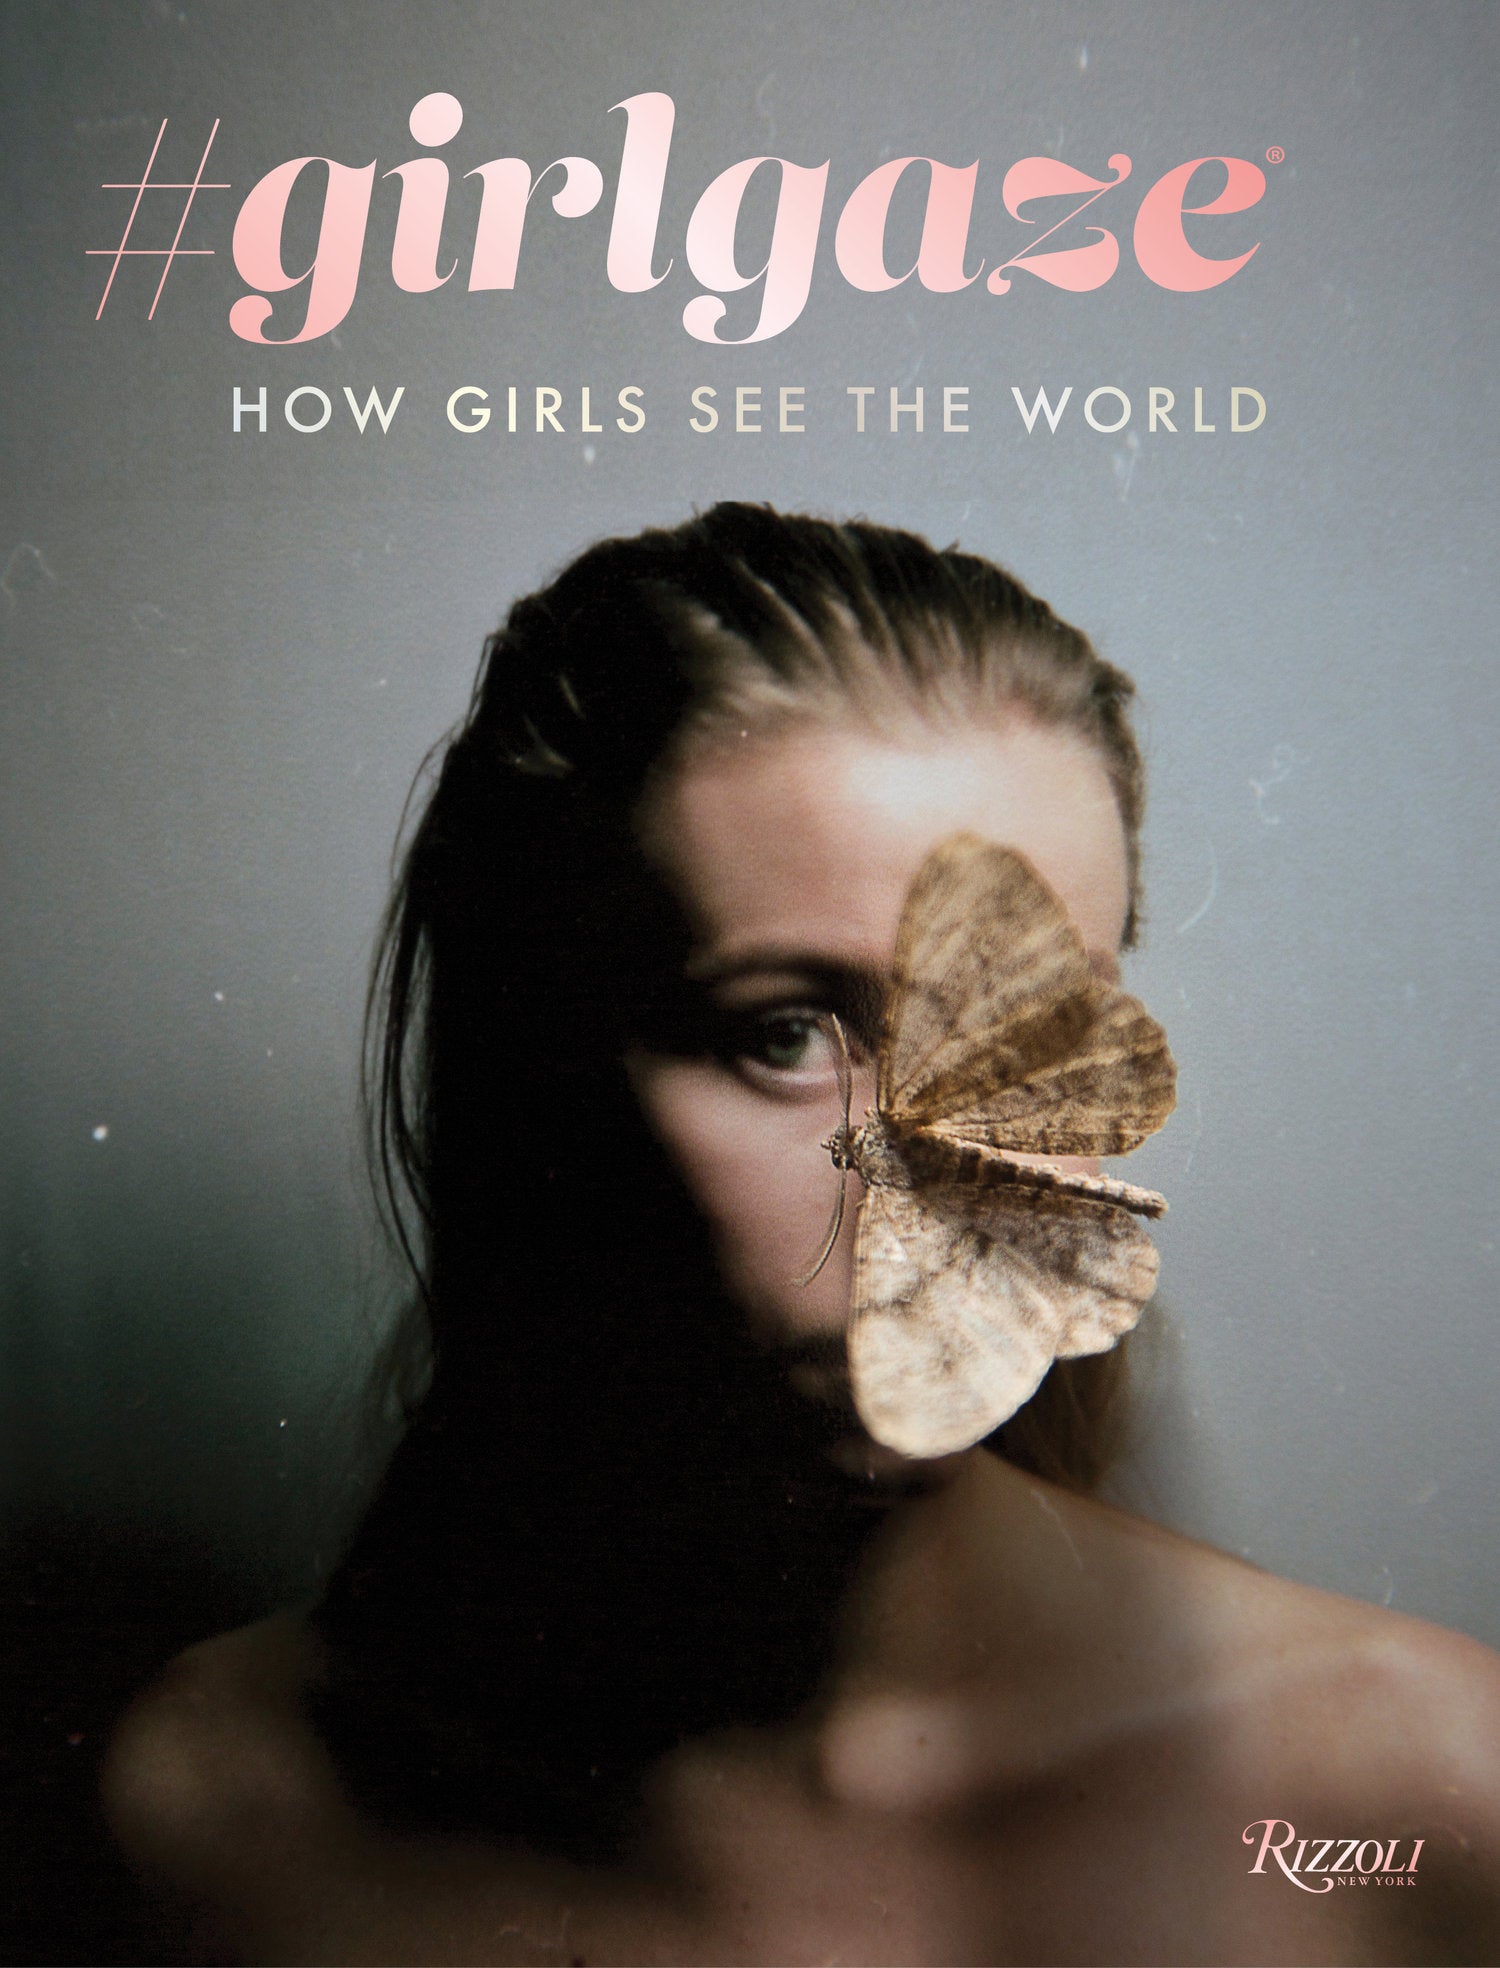 GirlGaze: How Girls See The World